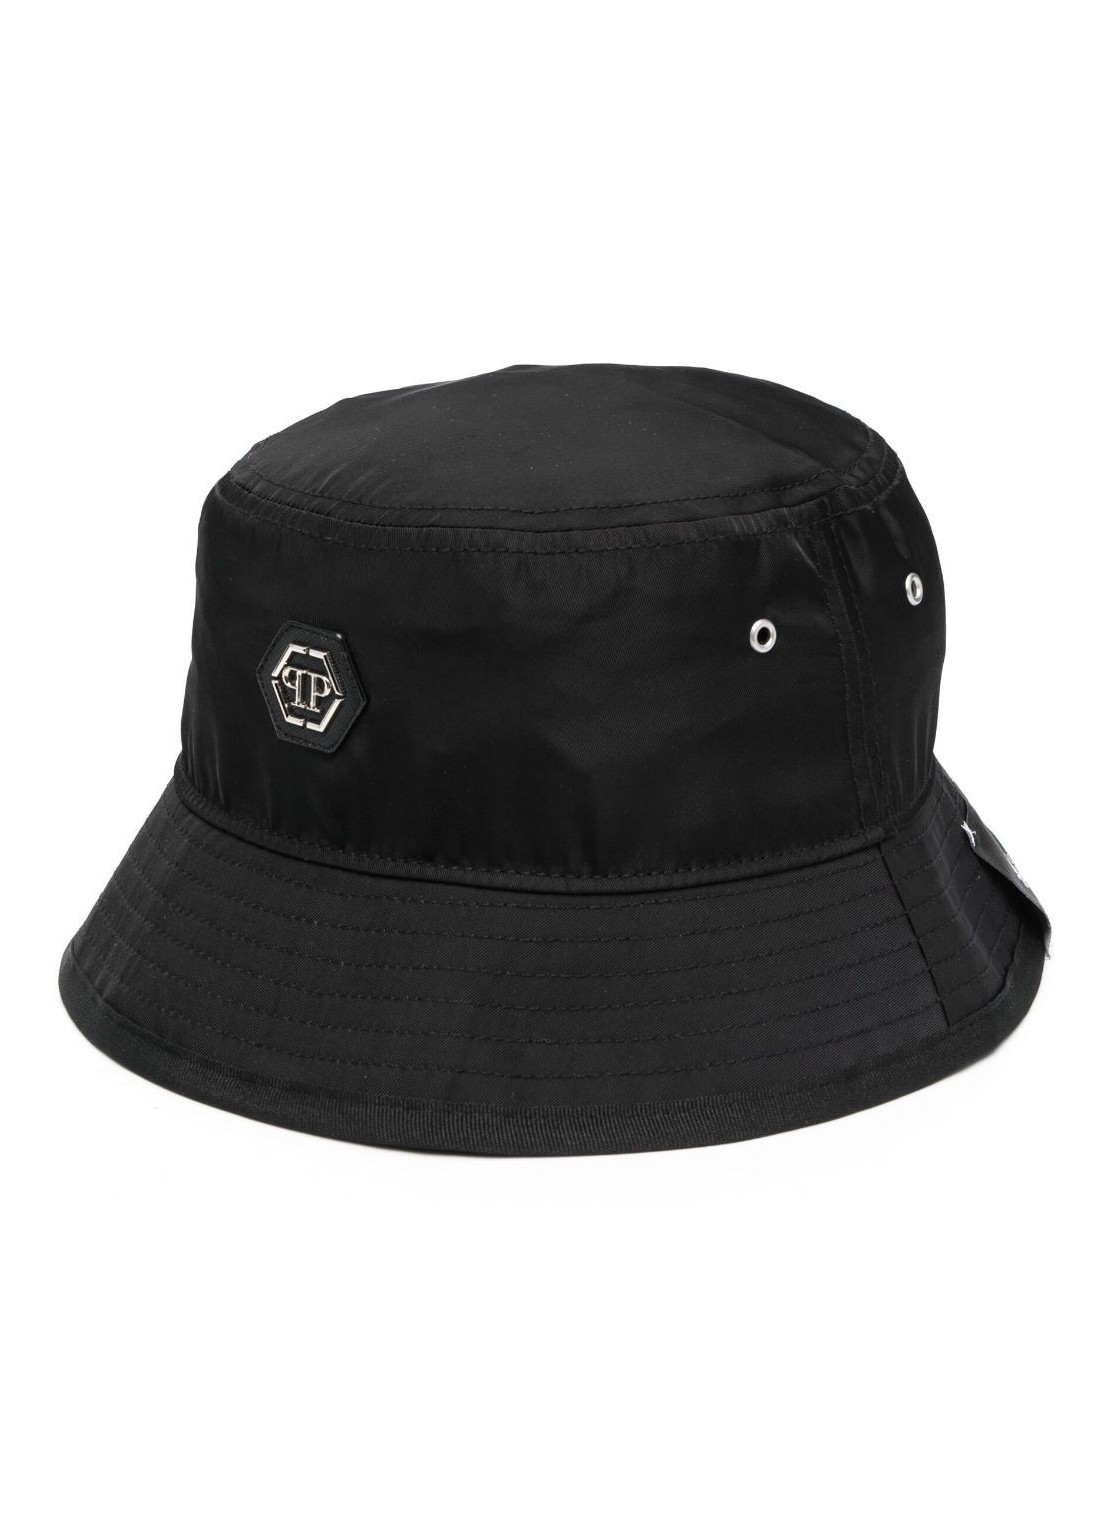 Gorras philipp plein cap man bucket hat gothic plein facauac0433pny002n 02 talla negro
 